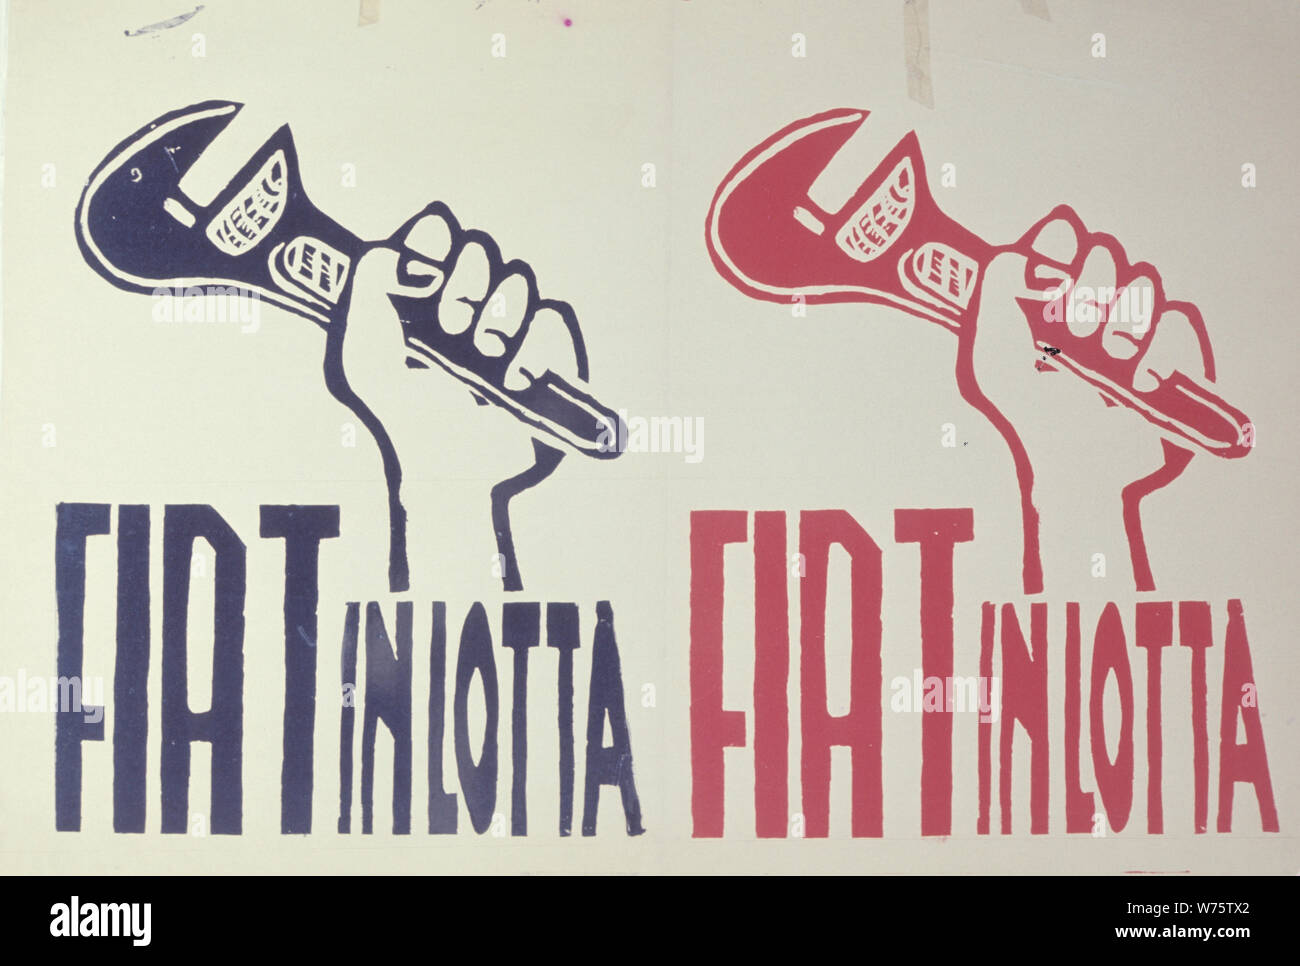 fiat in lotta, manifesto 70s Stock Photo